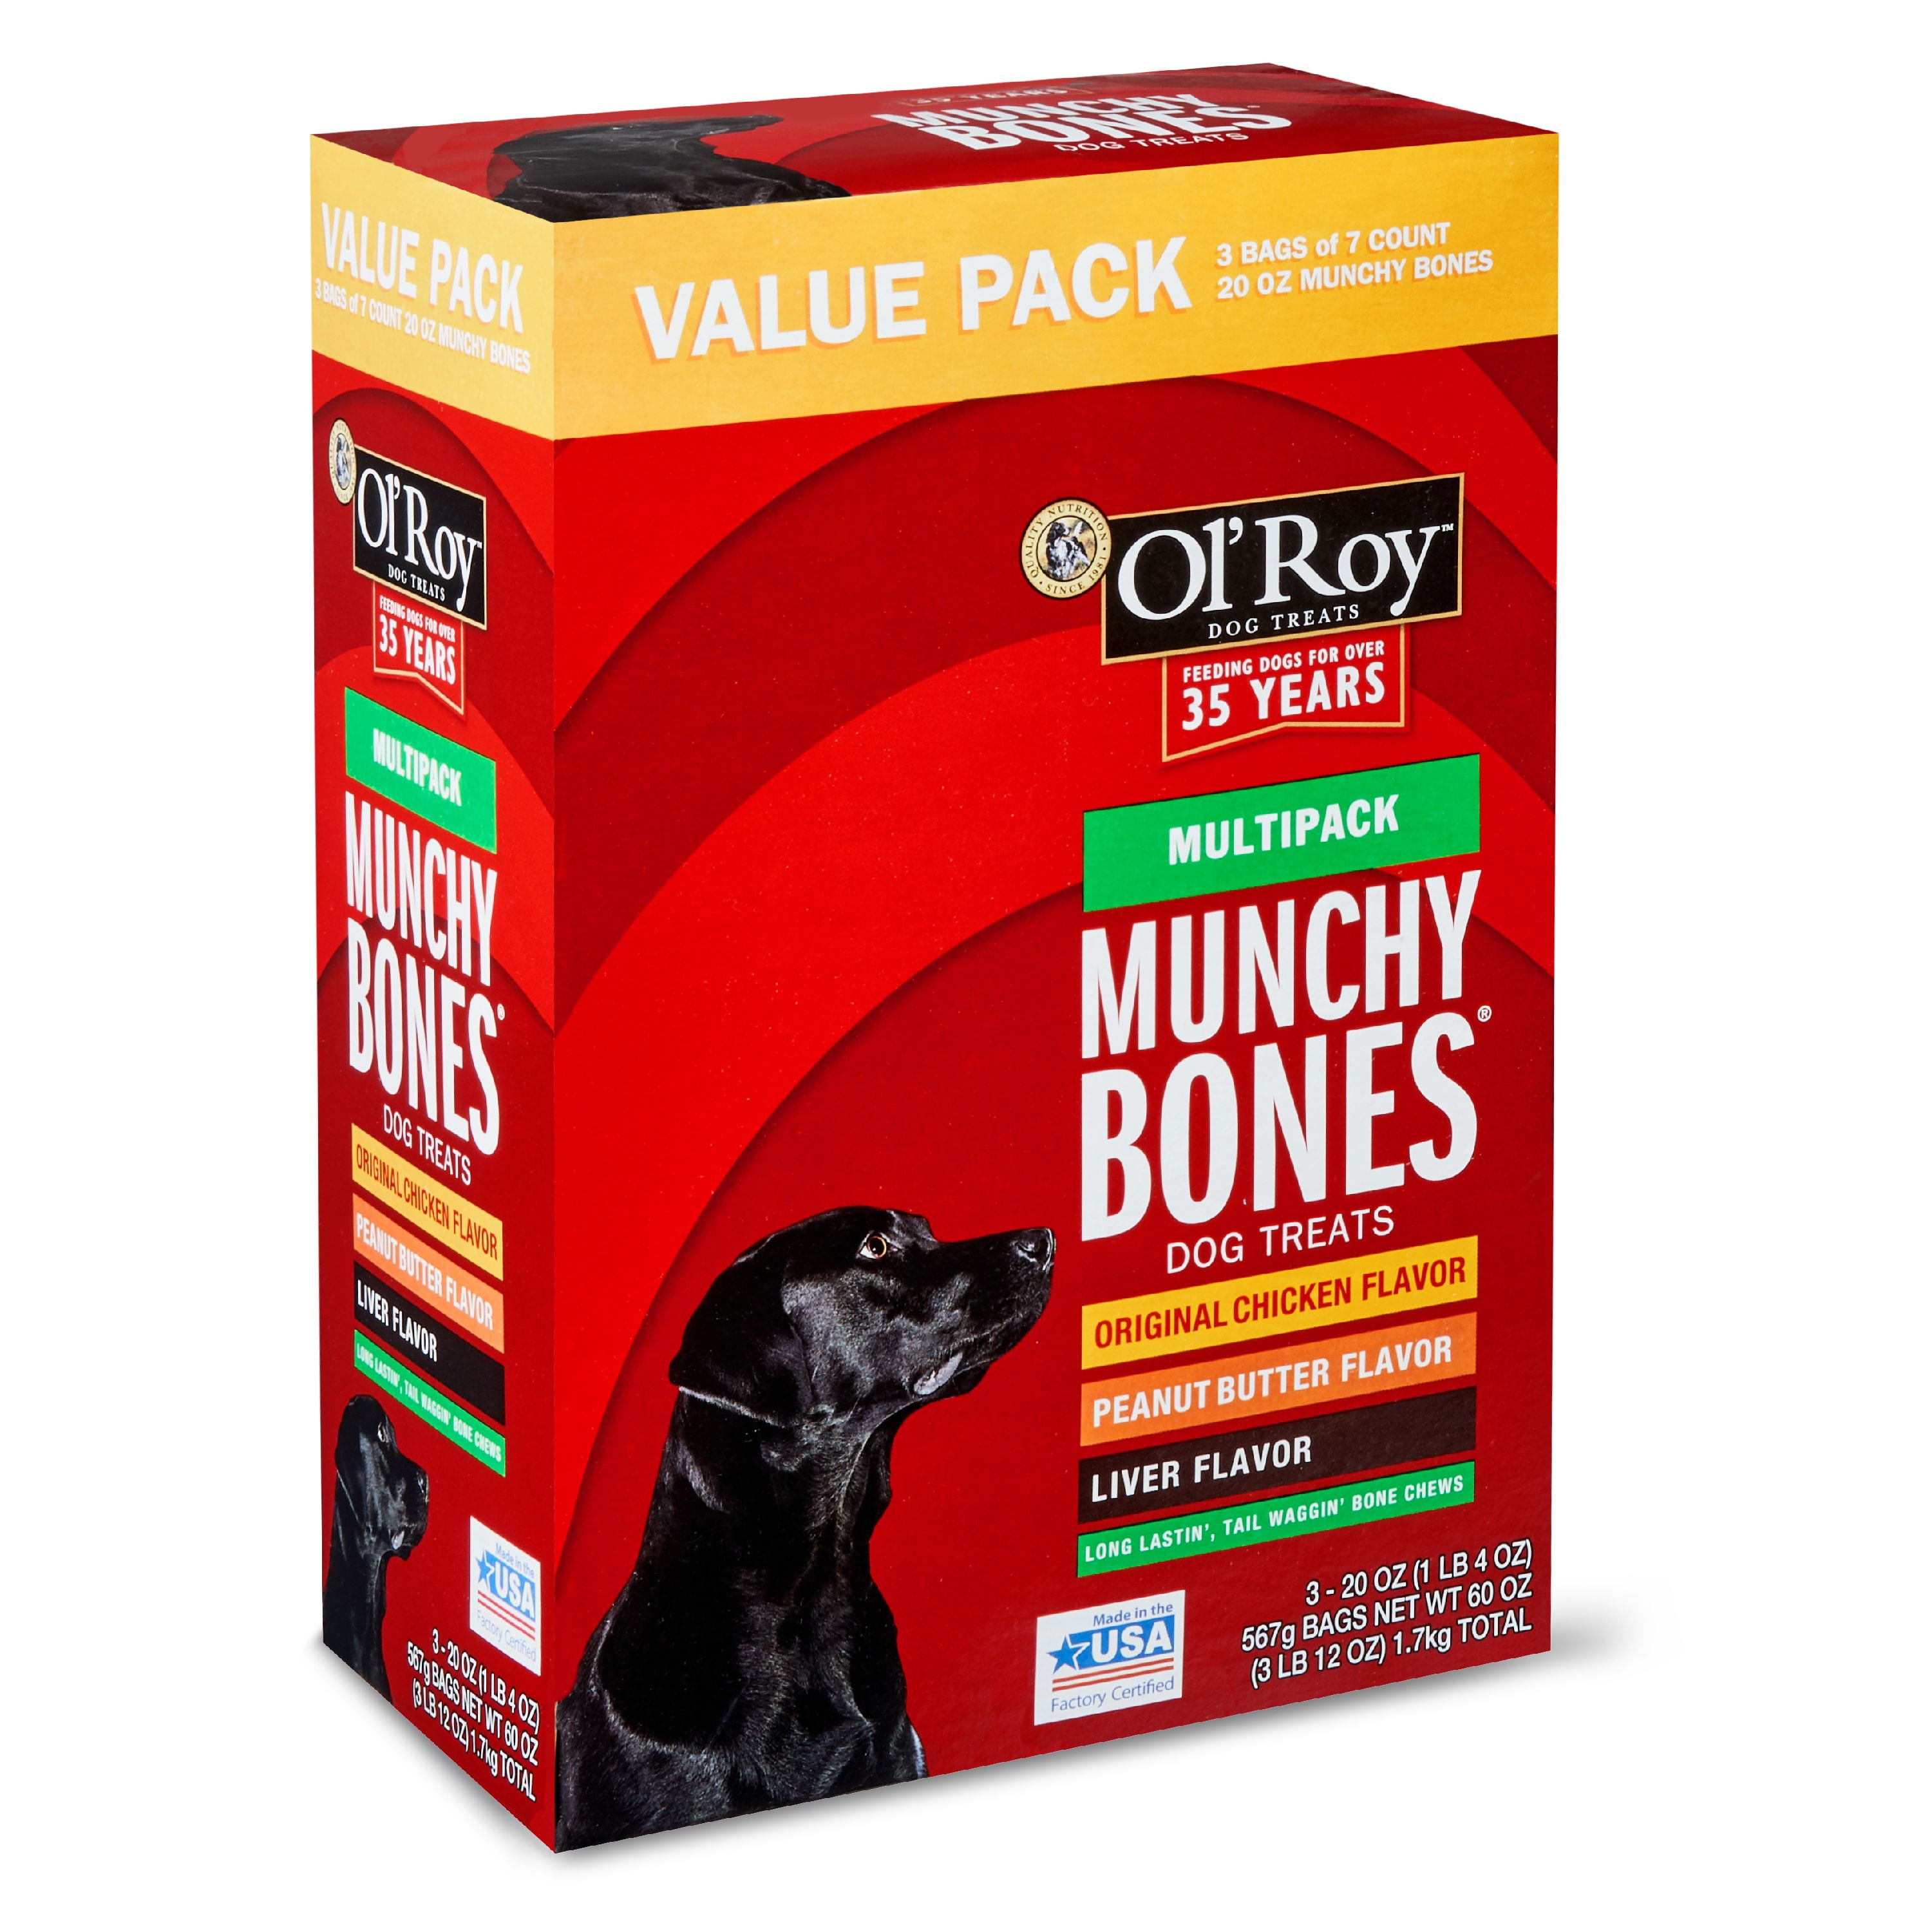 PAWKET TREATS Dog Treats Mix Pack